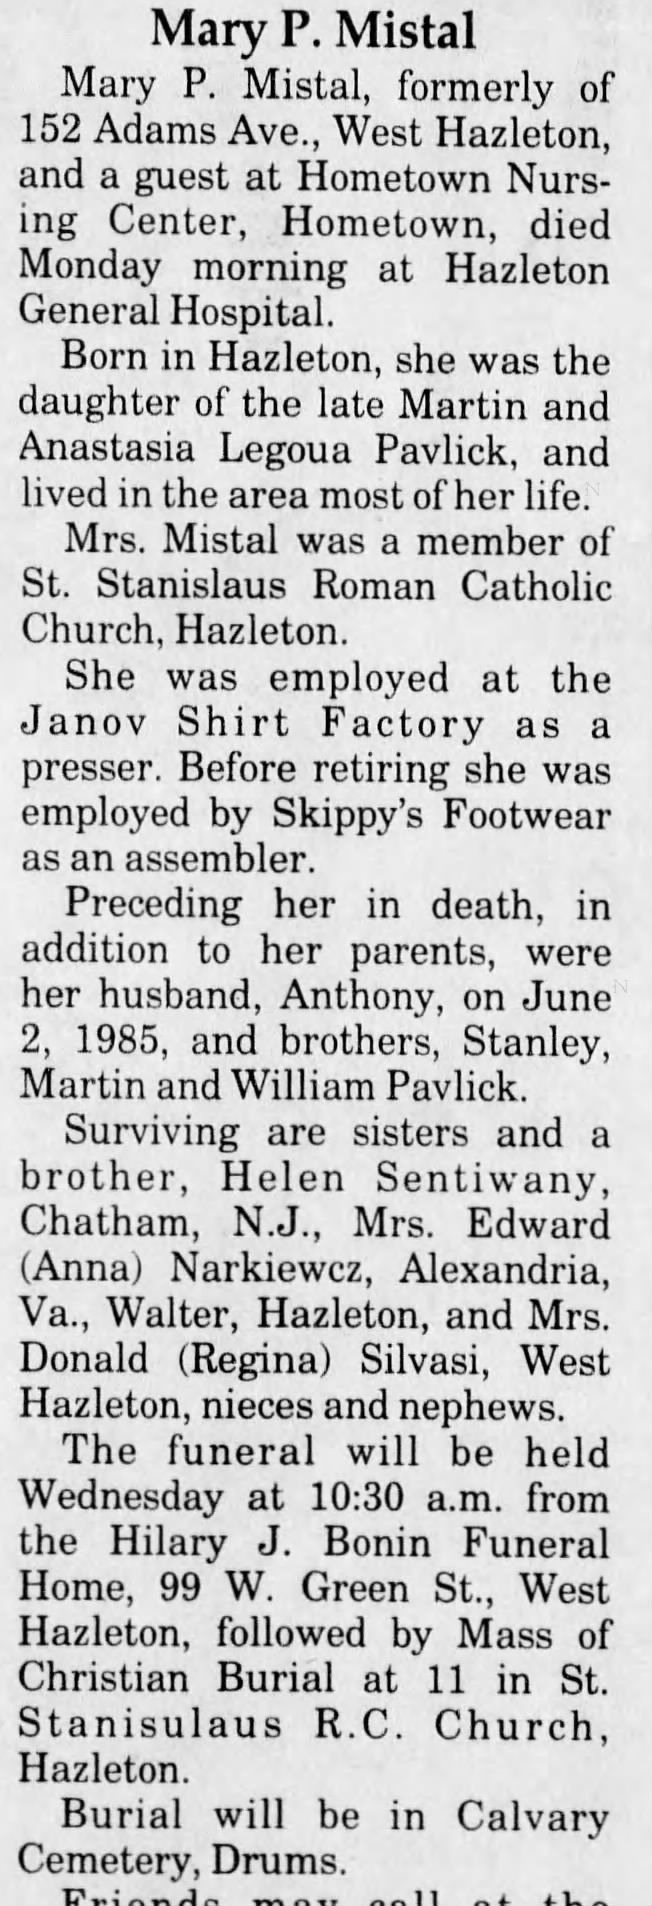 Mary Mistal (Aunt Helen Sentiwany sister)
Standard Speaker 2/17/1996